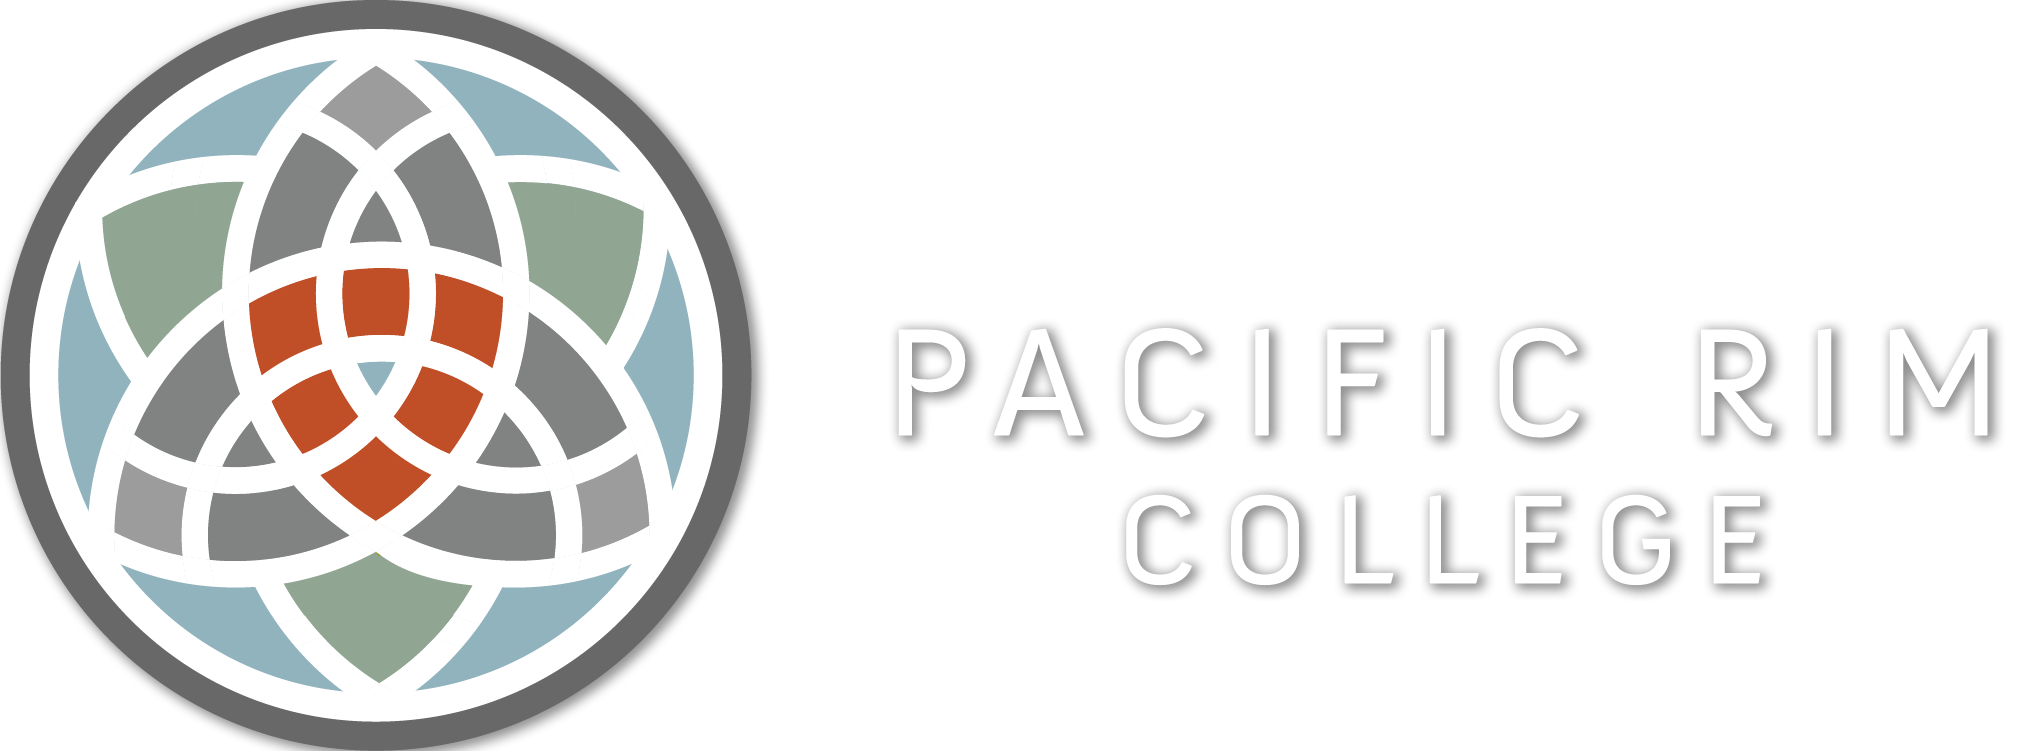 Oak Bay Softrends Filemaker client: Pacific Rim College